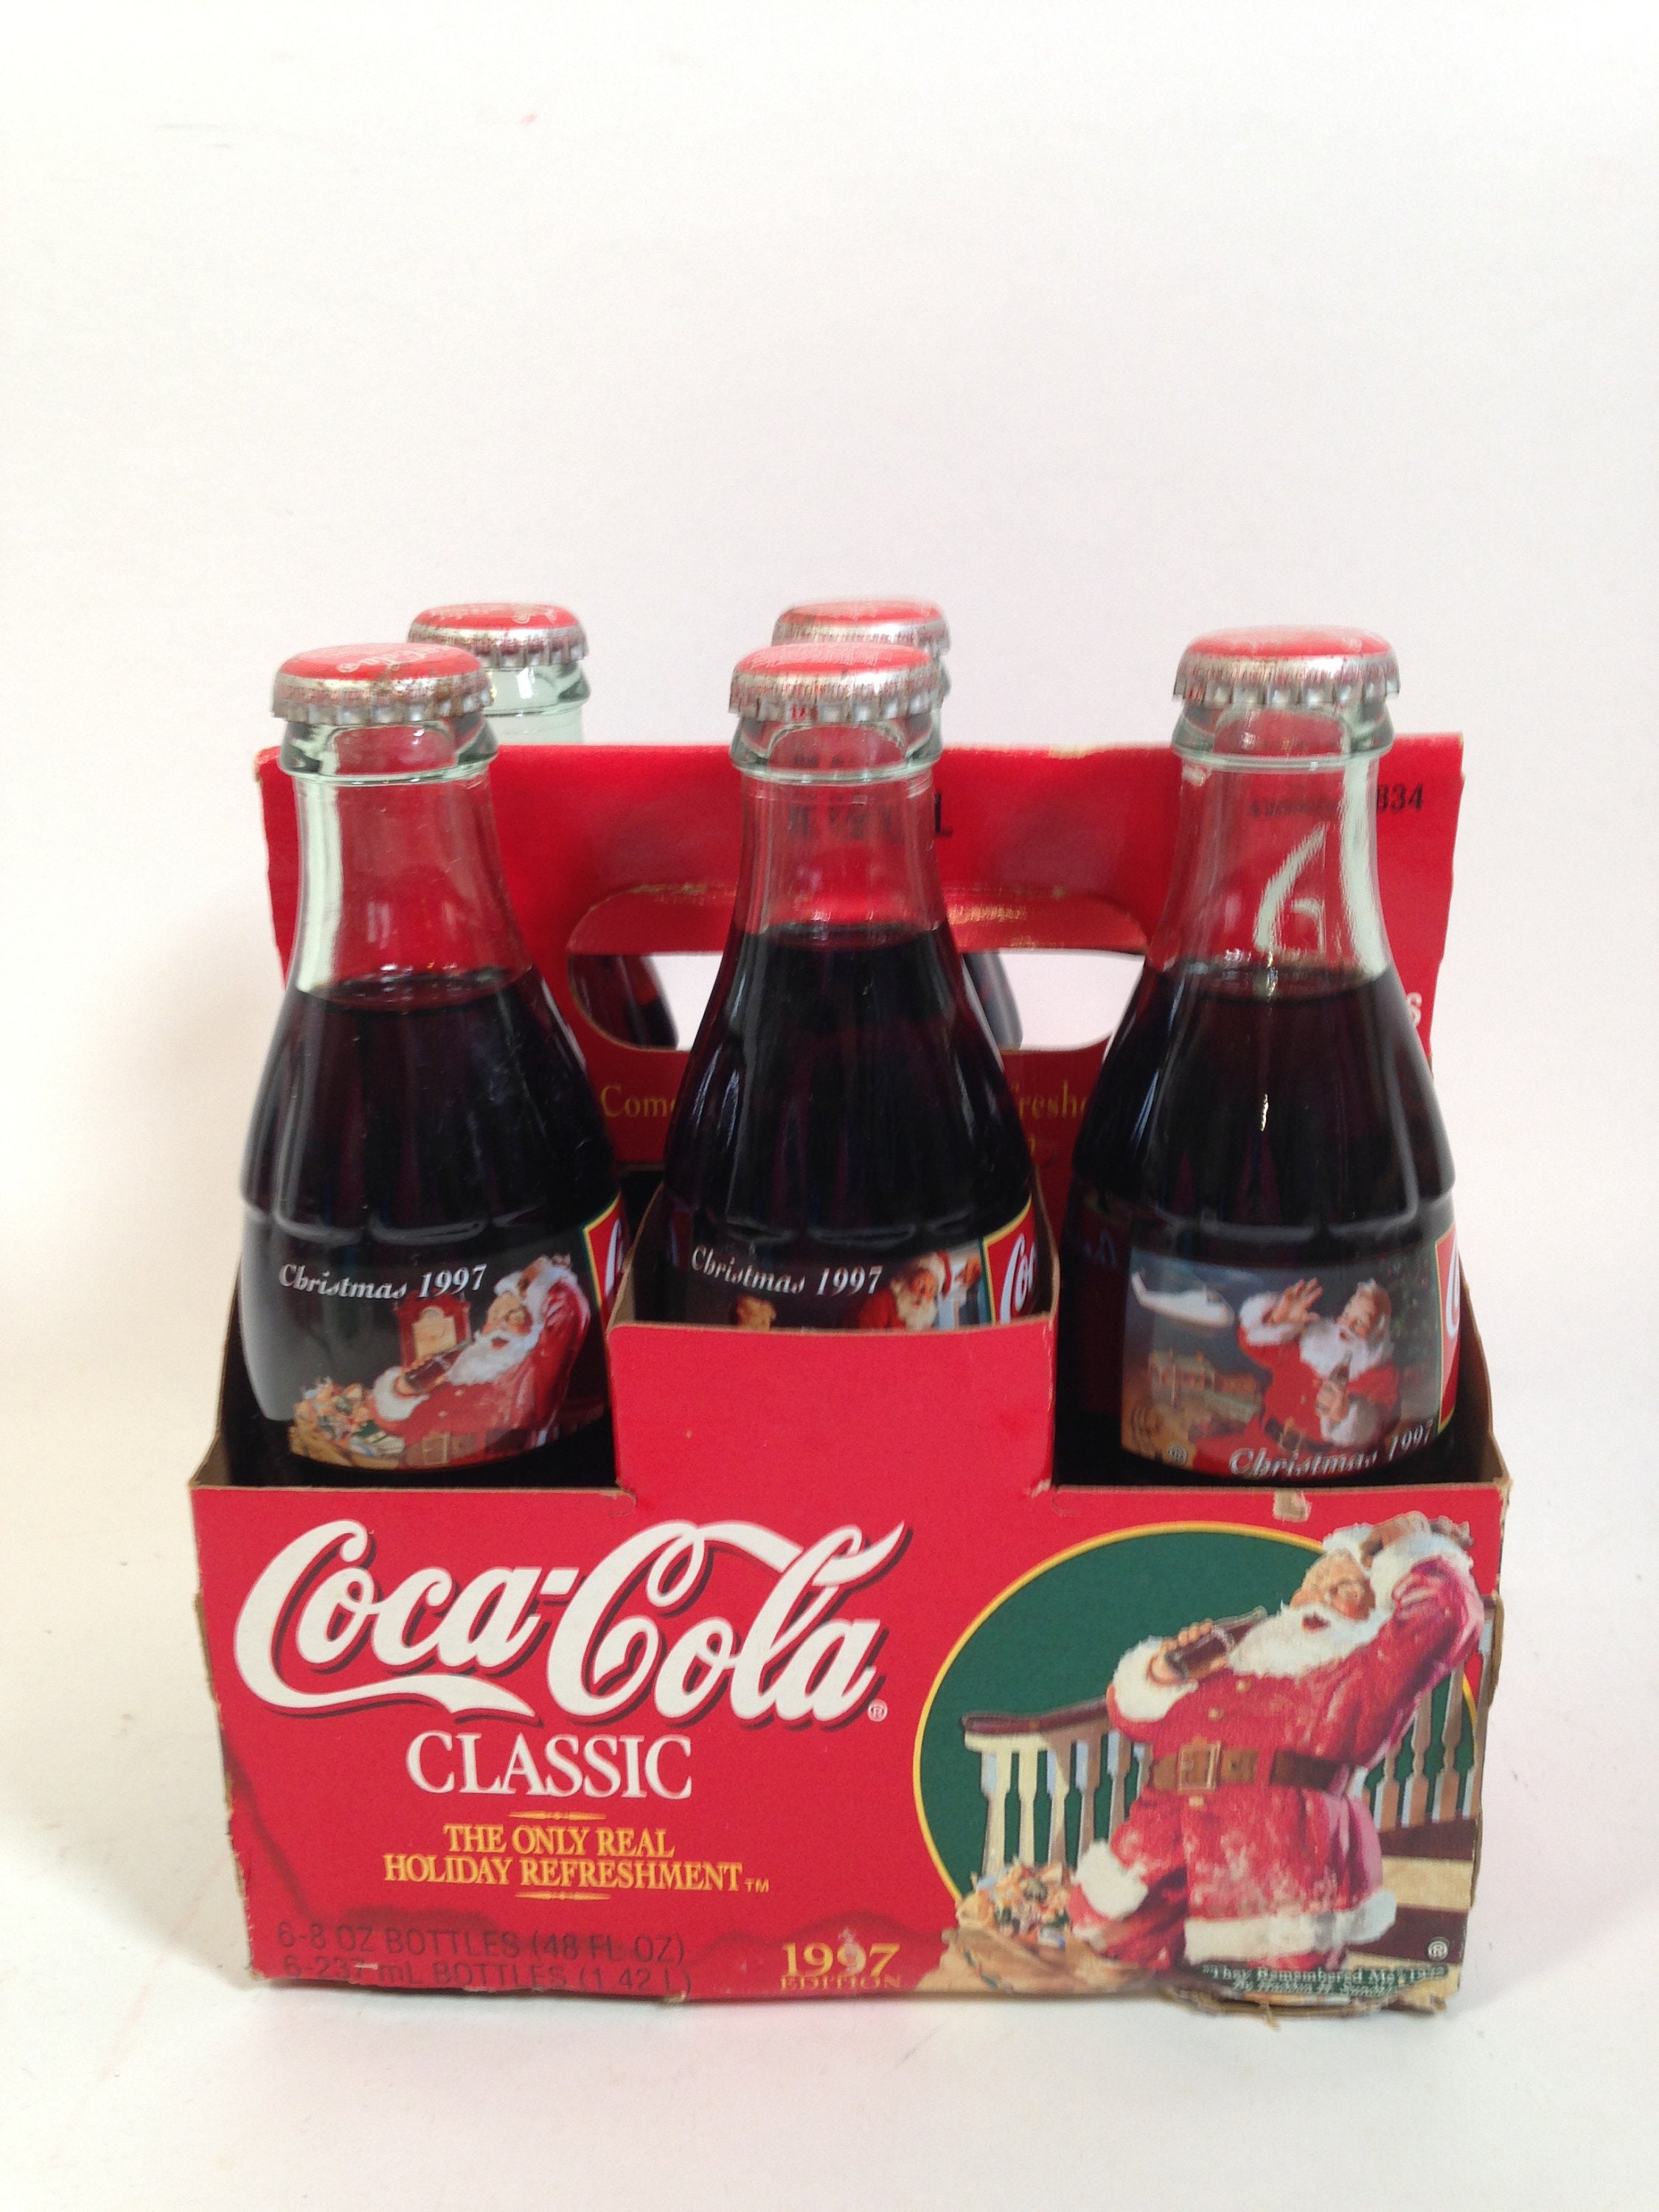 1997 Christmas Coca-cola Commemorative Bottles 4 Different Designs